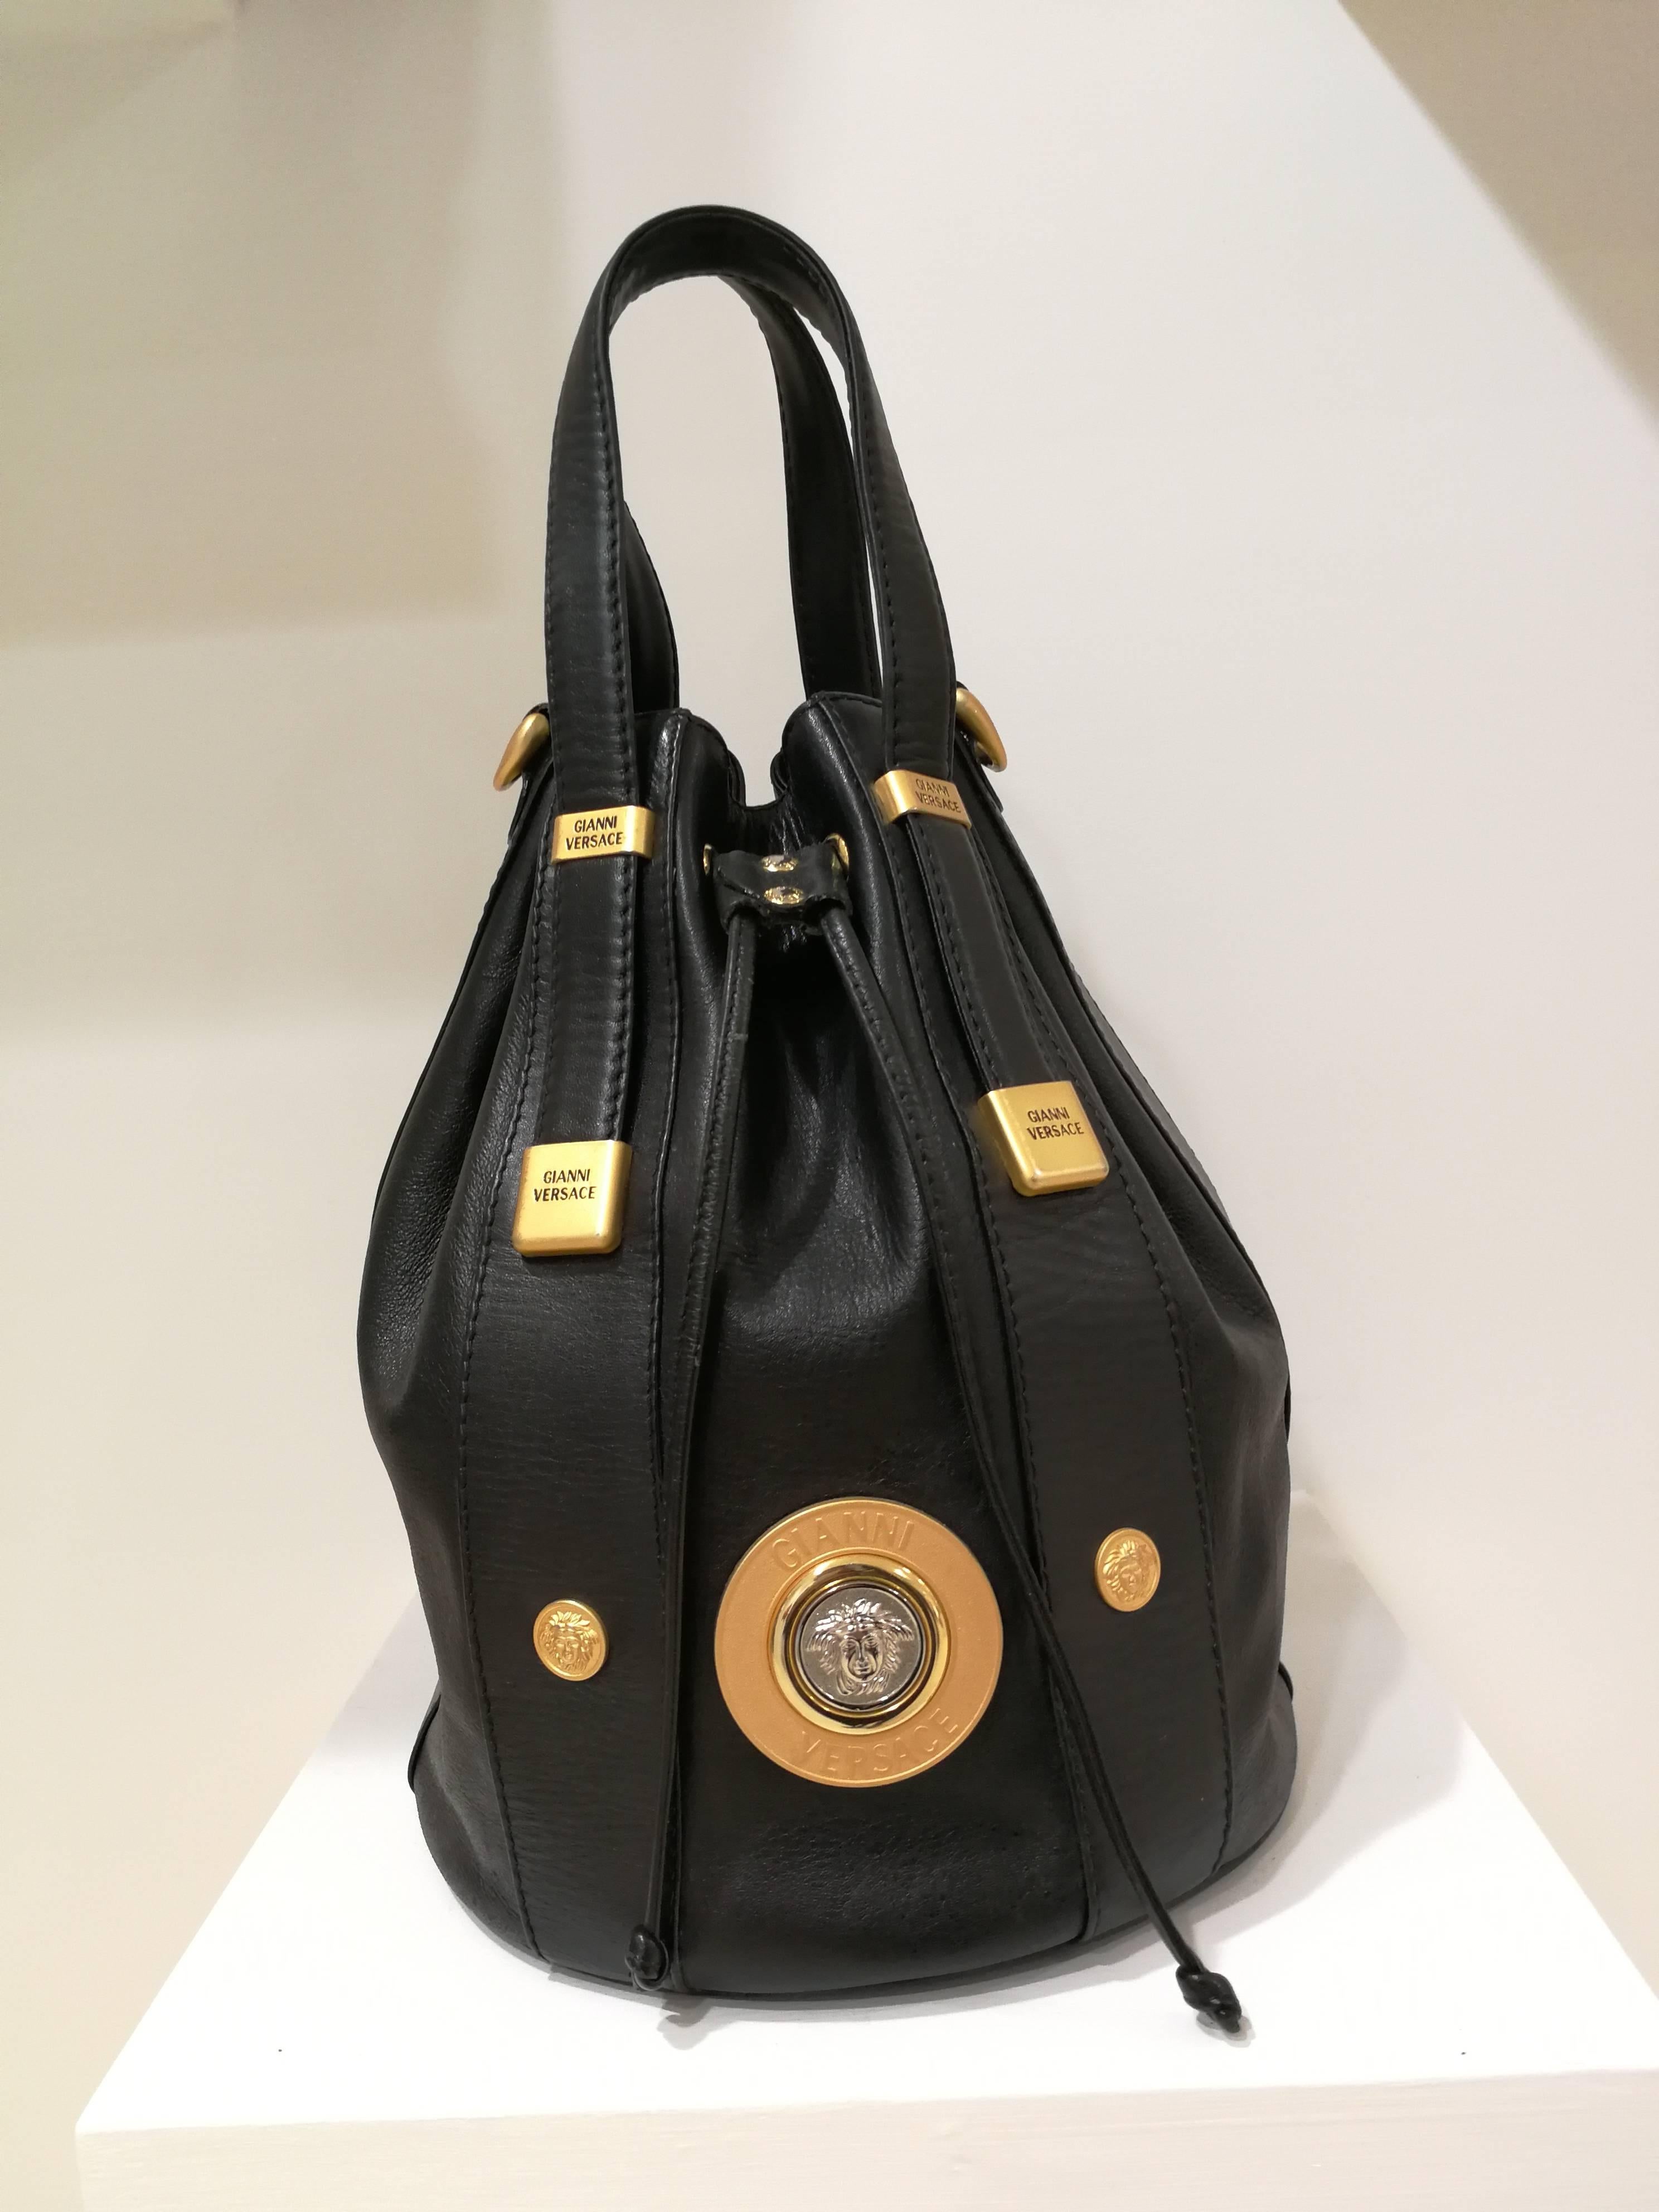 Gianni Versace Black leather Gold and Silver Tone Studs Satchel - Shoulder Bag 1